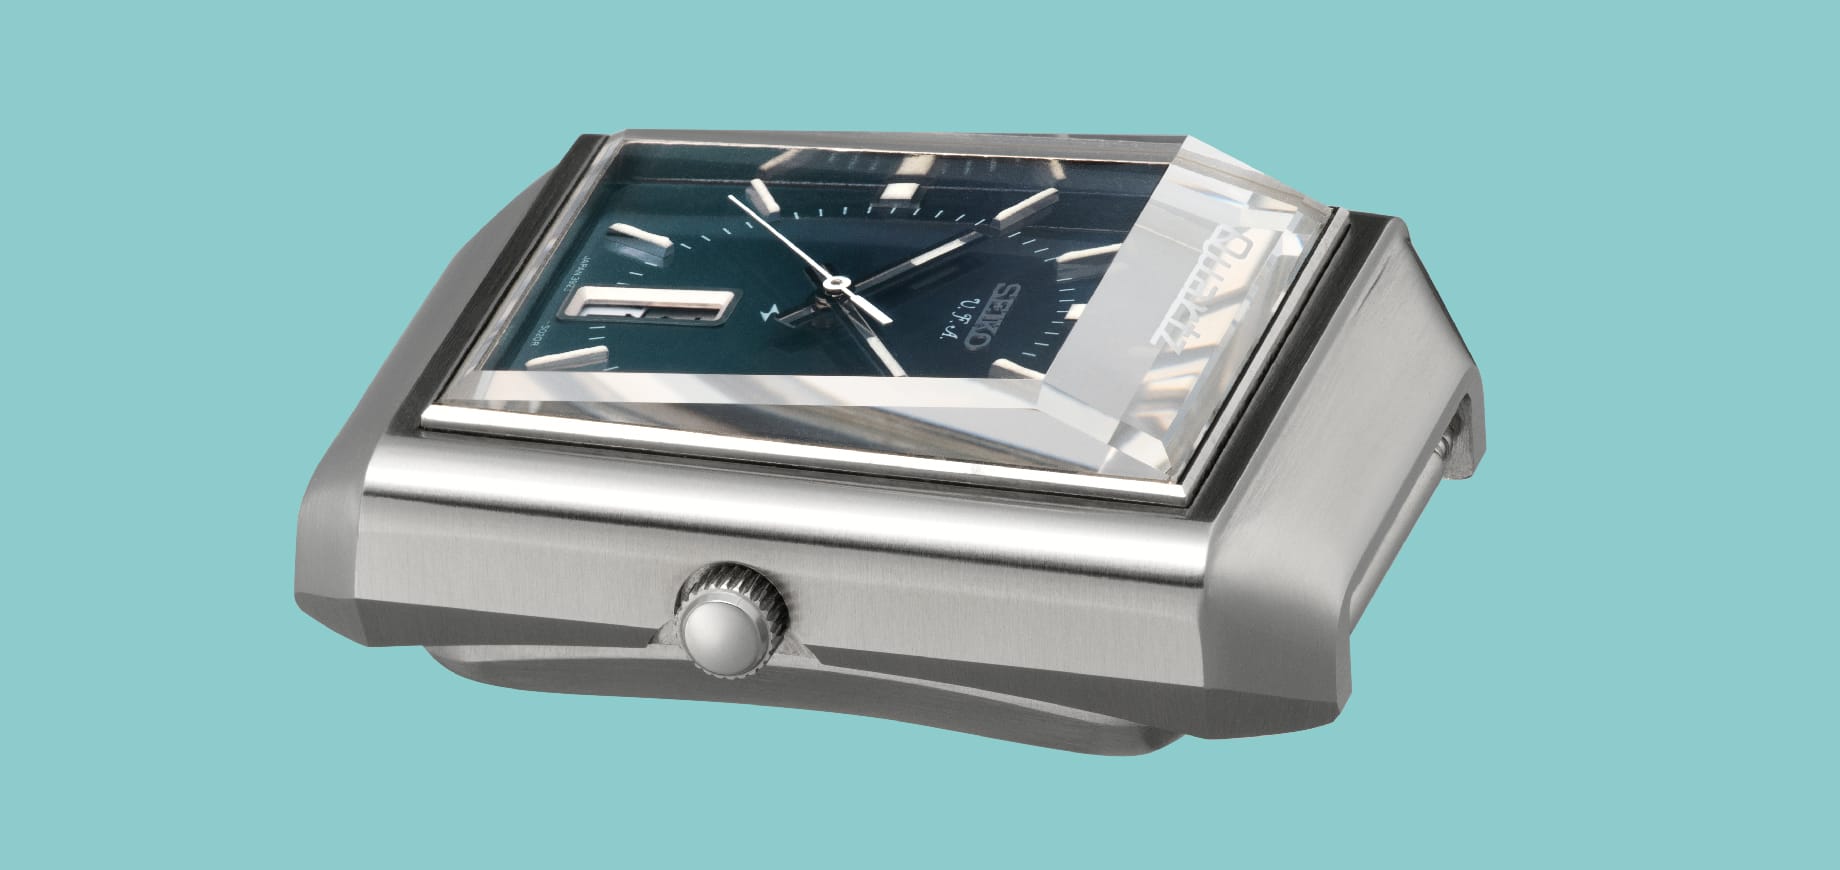 SEIKO フラッシュランプ付腕時計